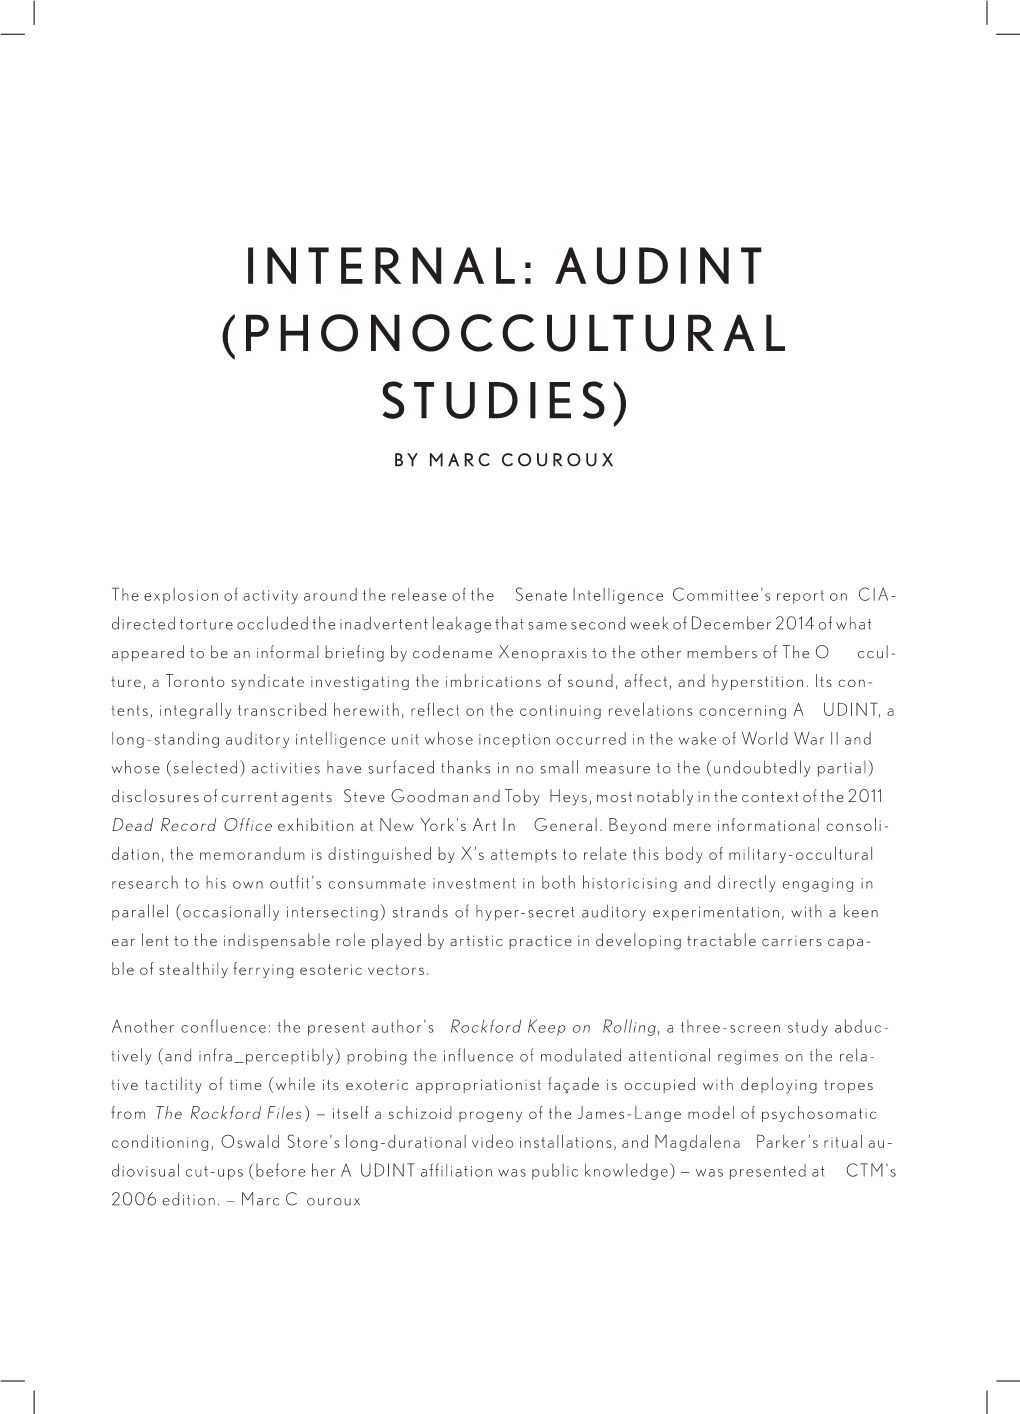 Internal: Audint (Phonoccultural Studies)